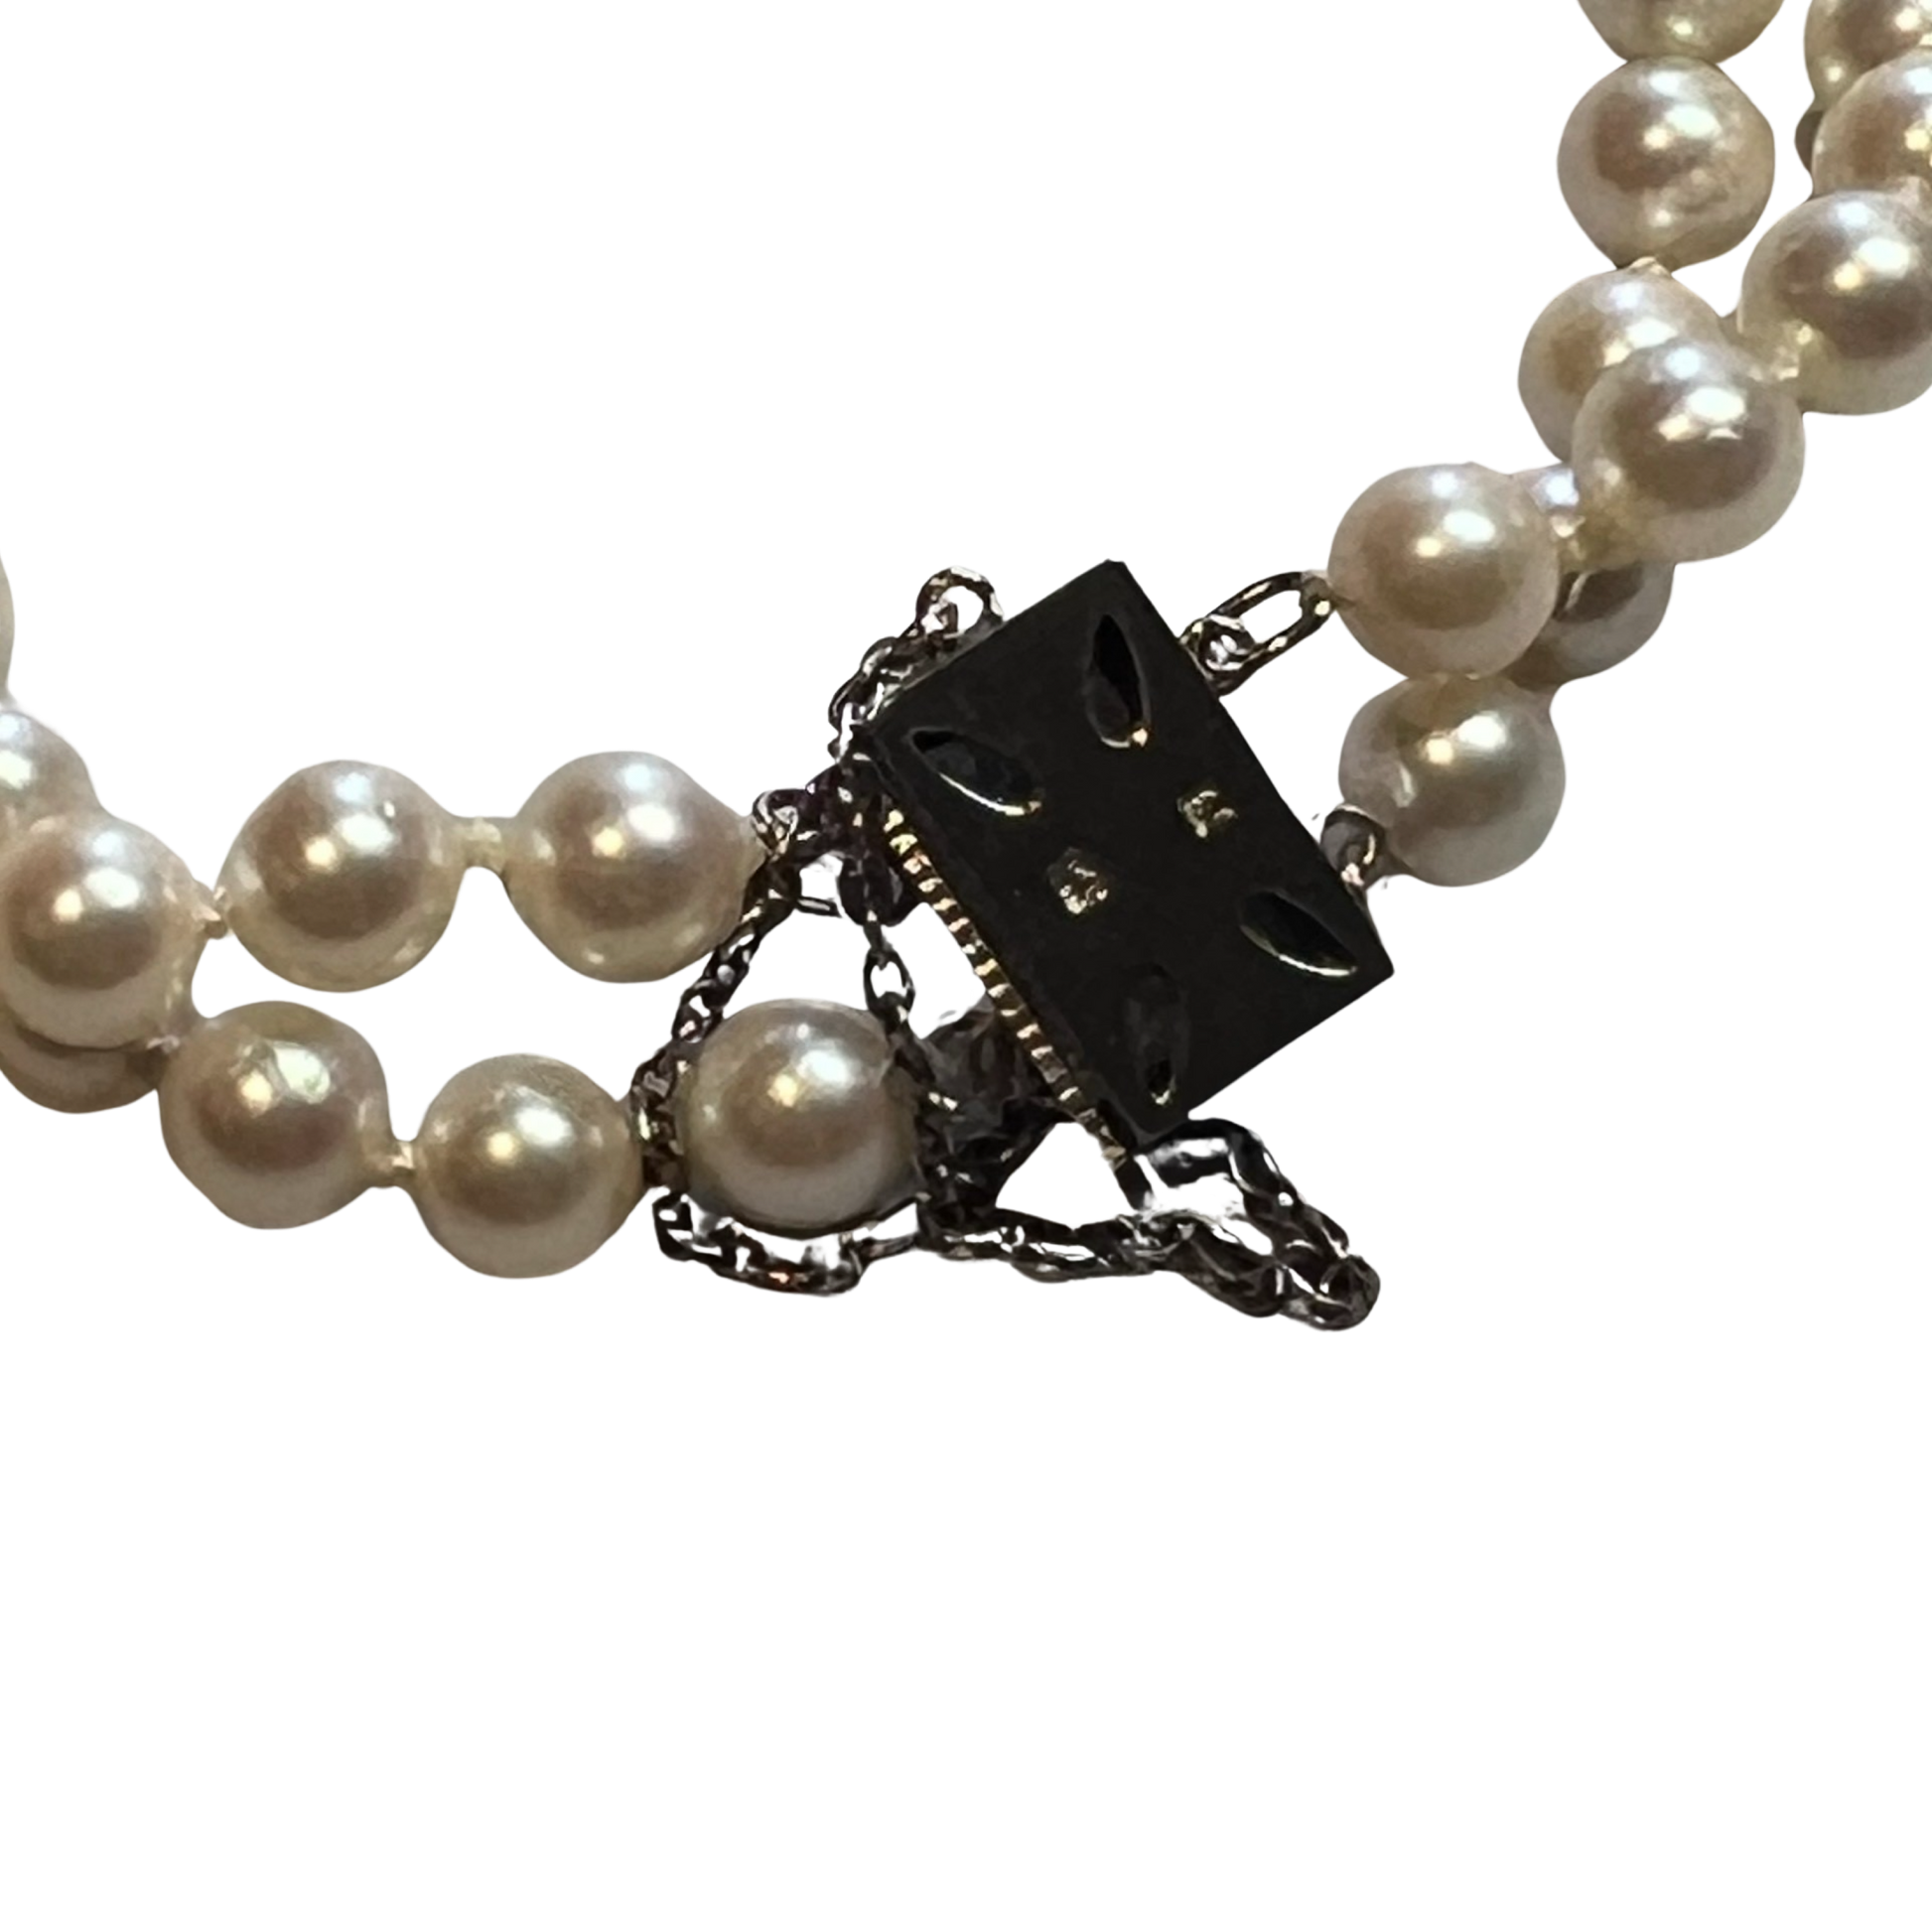 Mikimoto Estate Akoya Pearl 2 Strand Bracelet 7 5/8 in 5.85 mm M341 - Certified Fine Jewelry